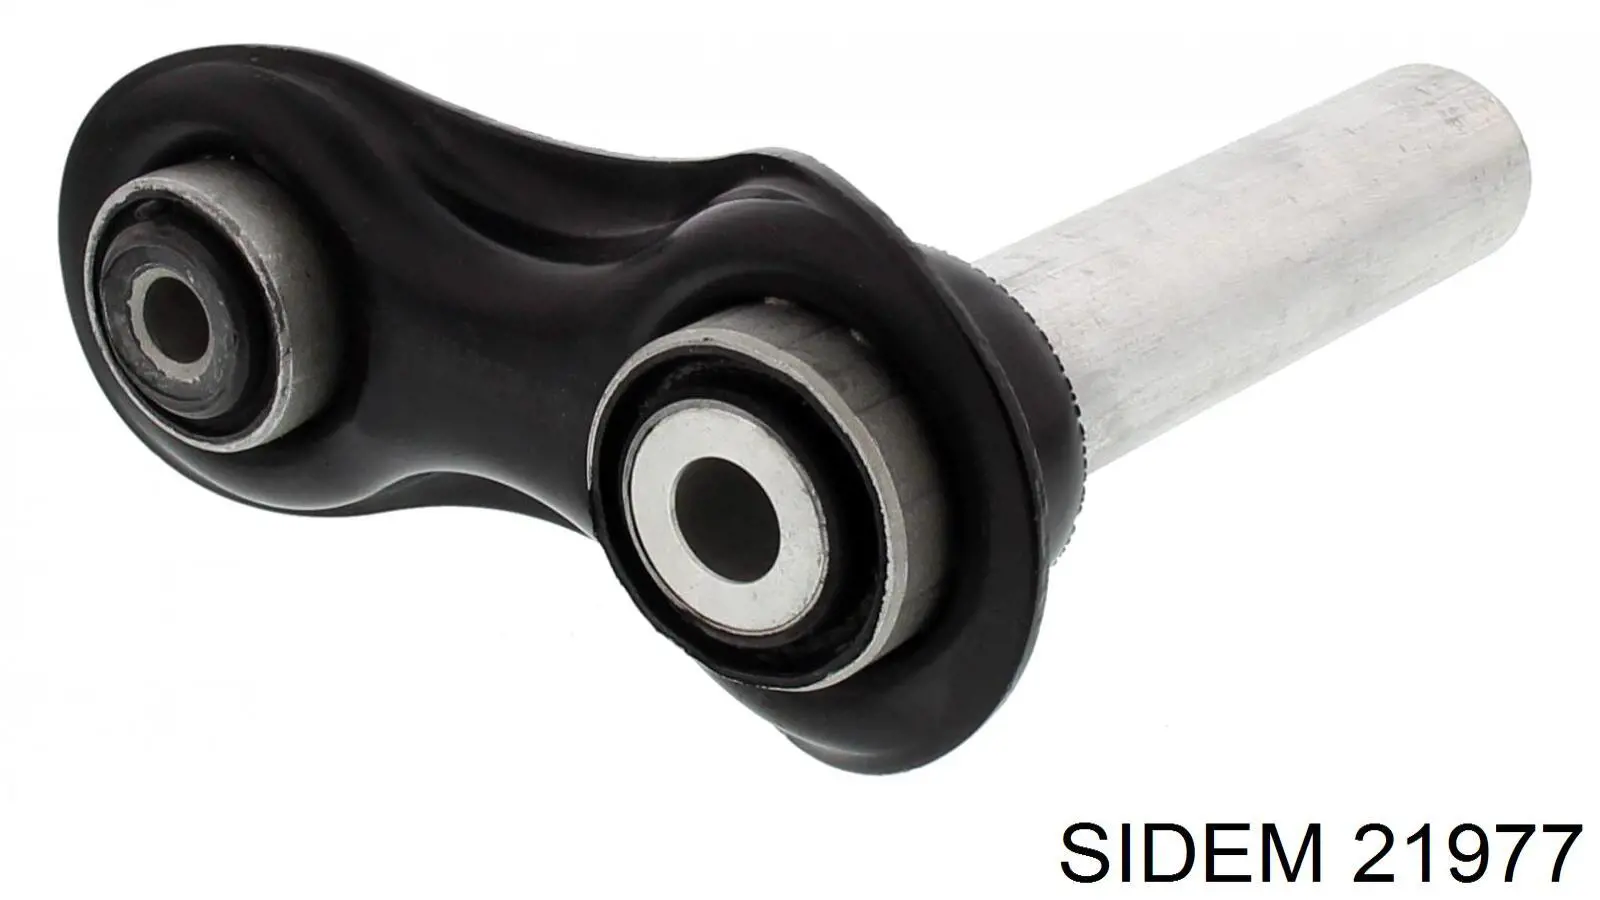 21977 Sidem palanca de soporte suspension trasera longitudinal inferior izquierda/derecha